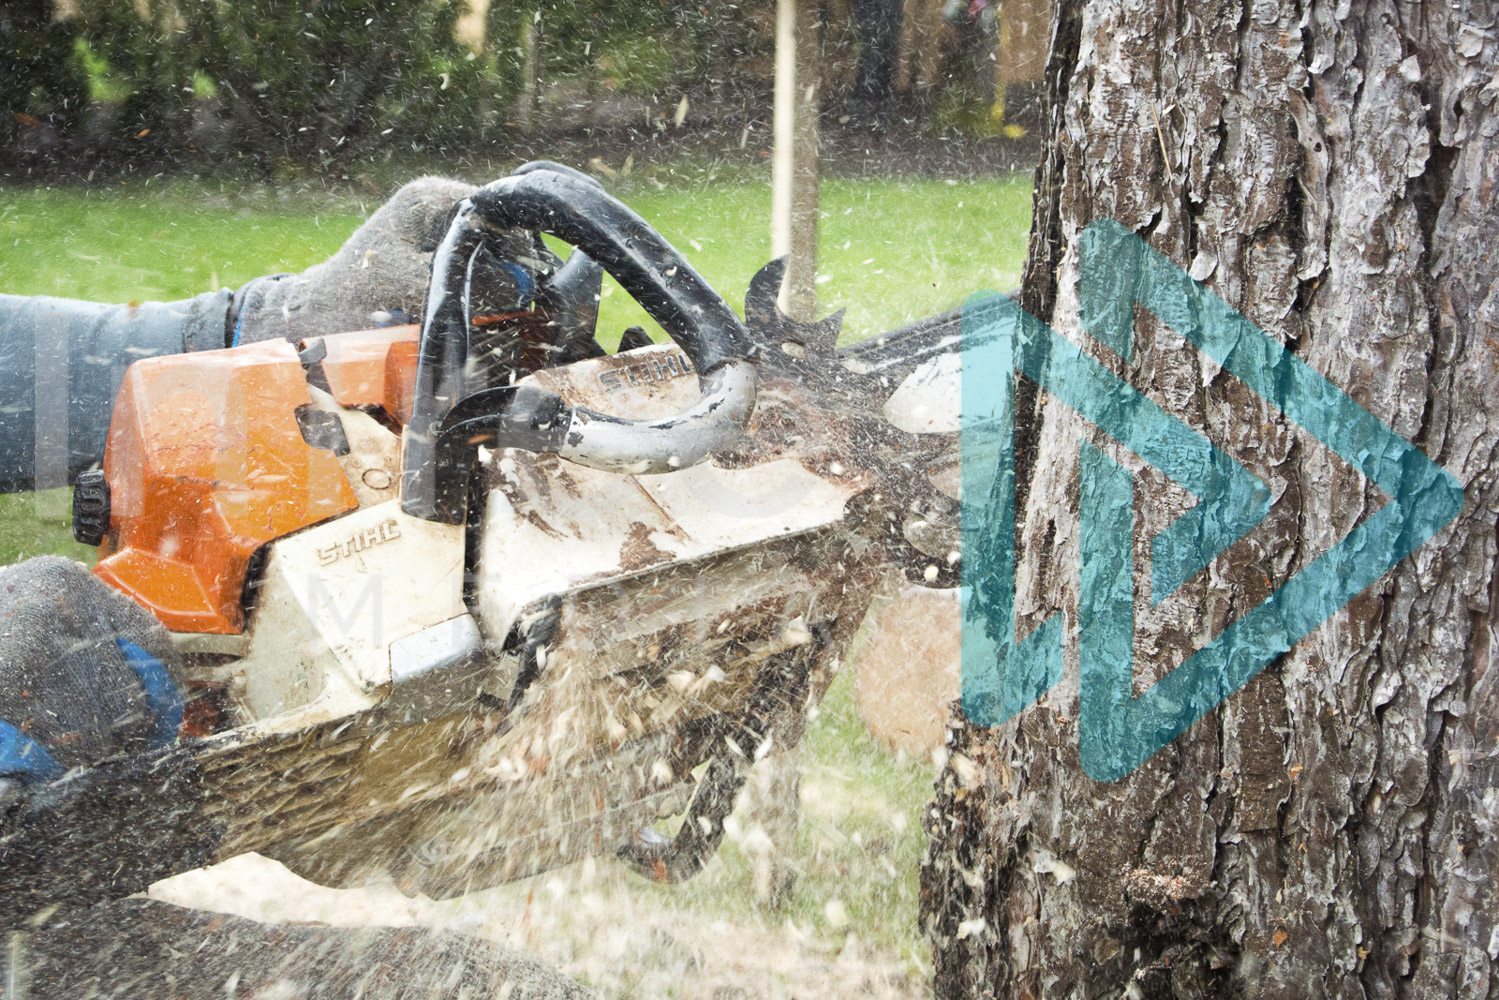 Stihl chainsaw making cut into tree sawdust spraying InTree arborist image 001-21-9891